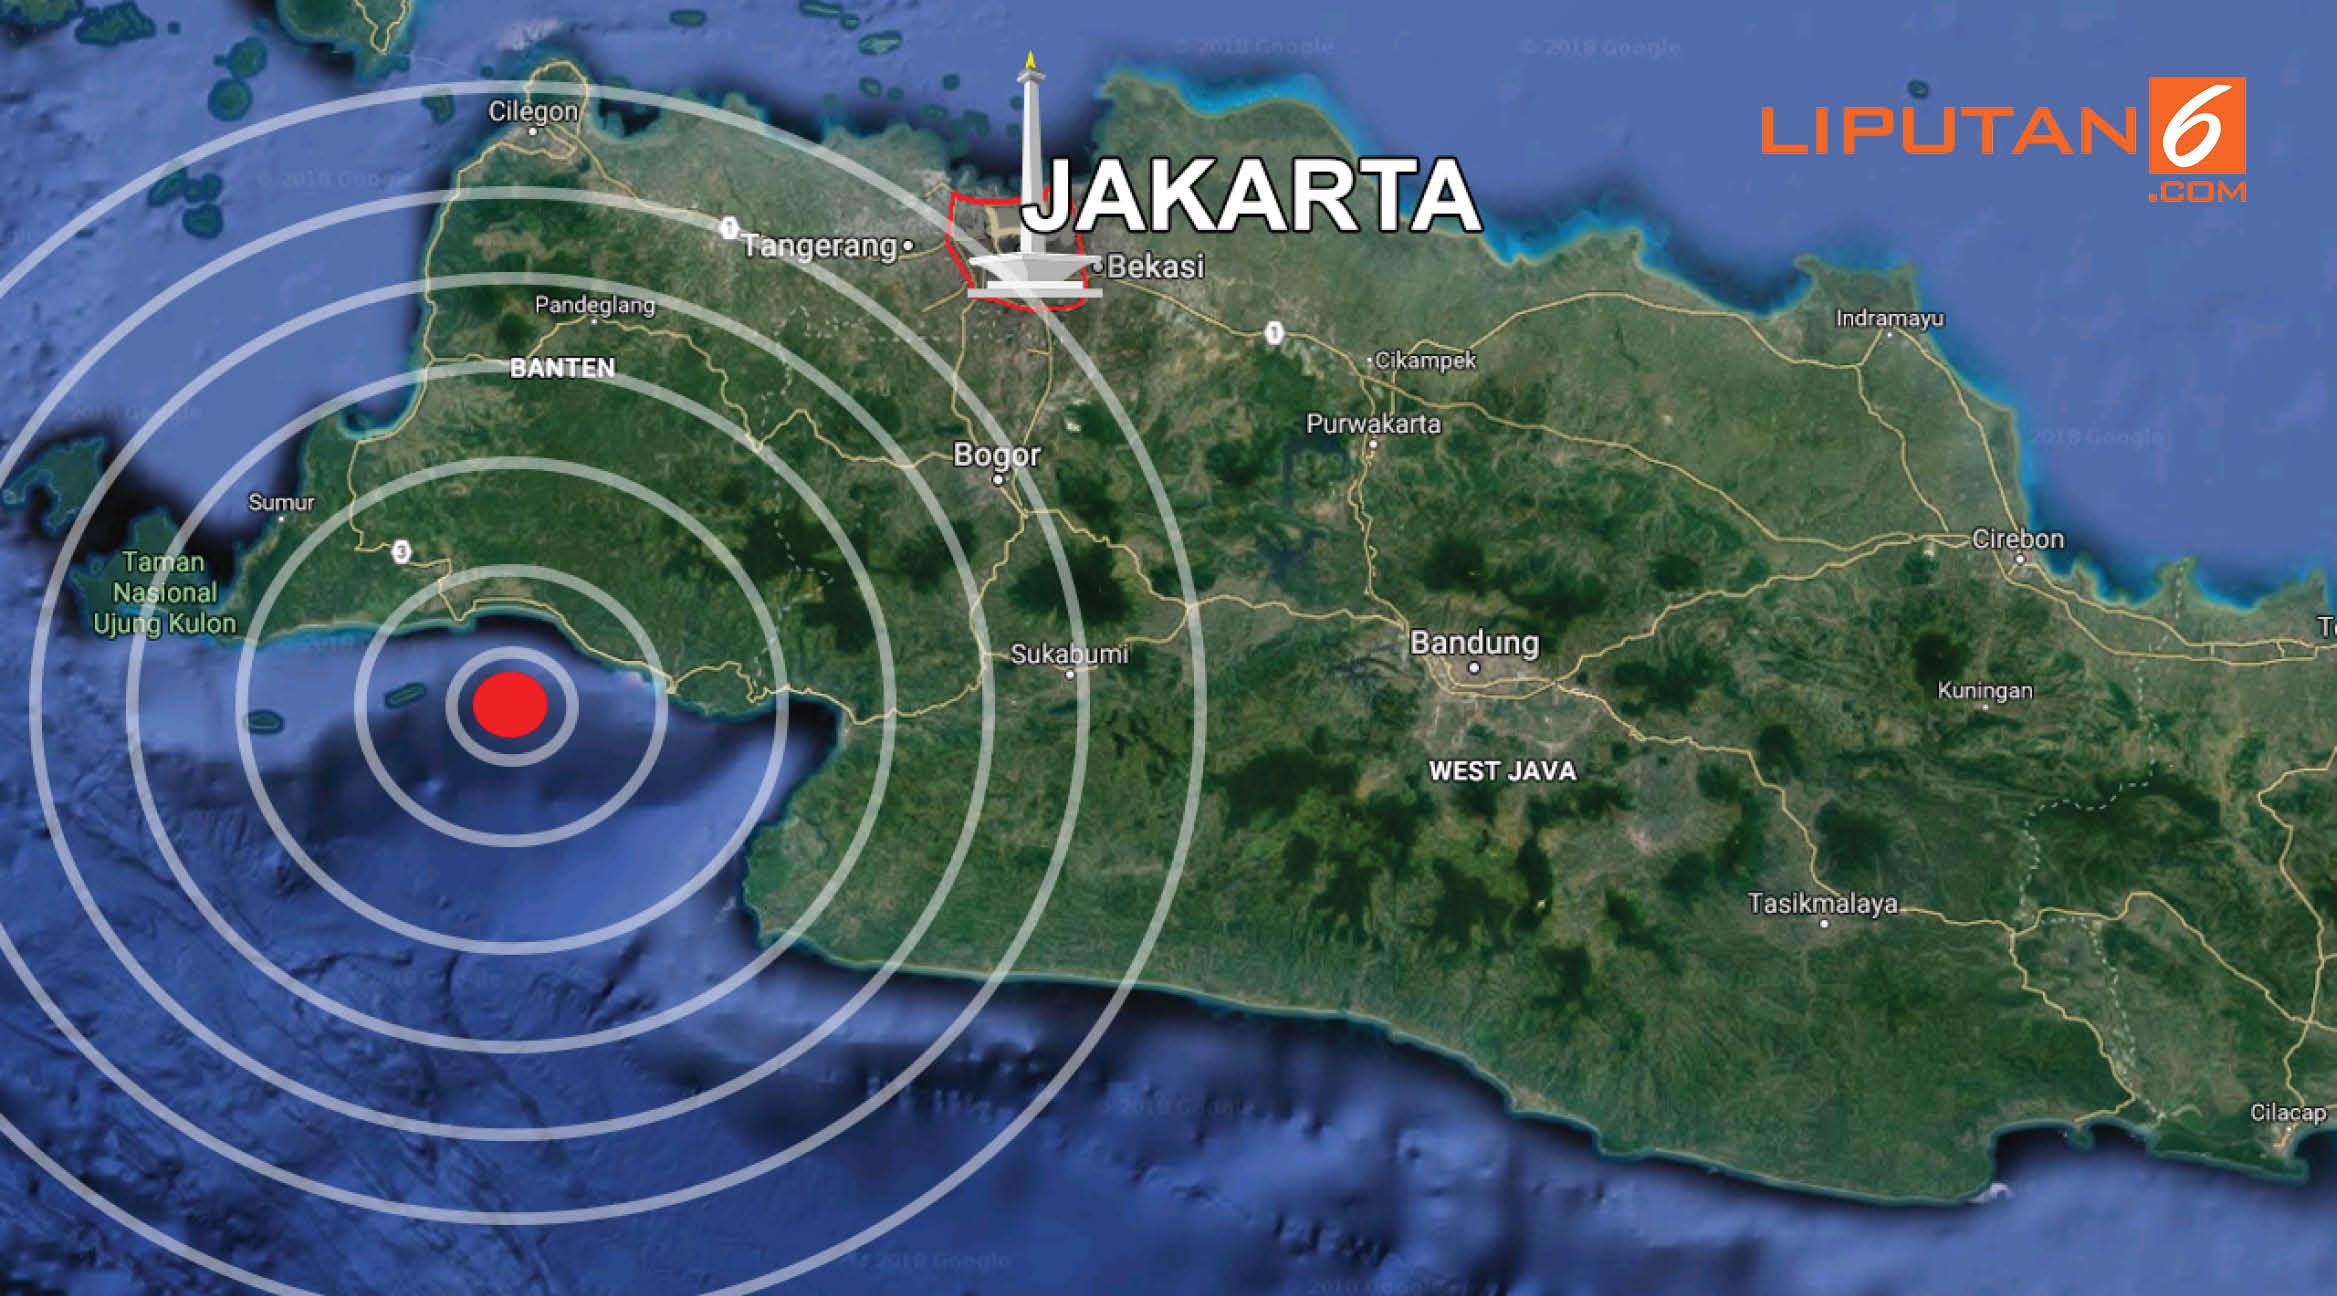 Headline Ancaman Gempa 8 7 Sr Intai Jakarta Apa Yang Harus Dilakukan News Liputan6 Com